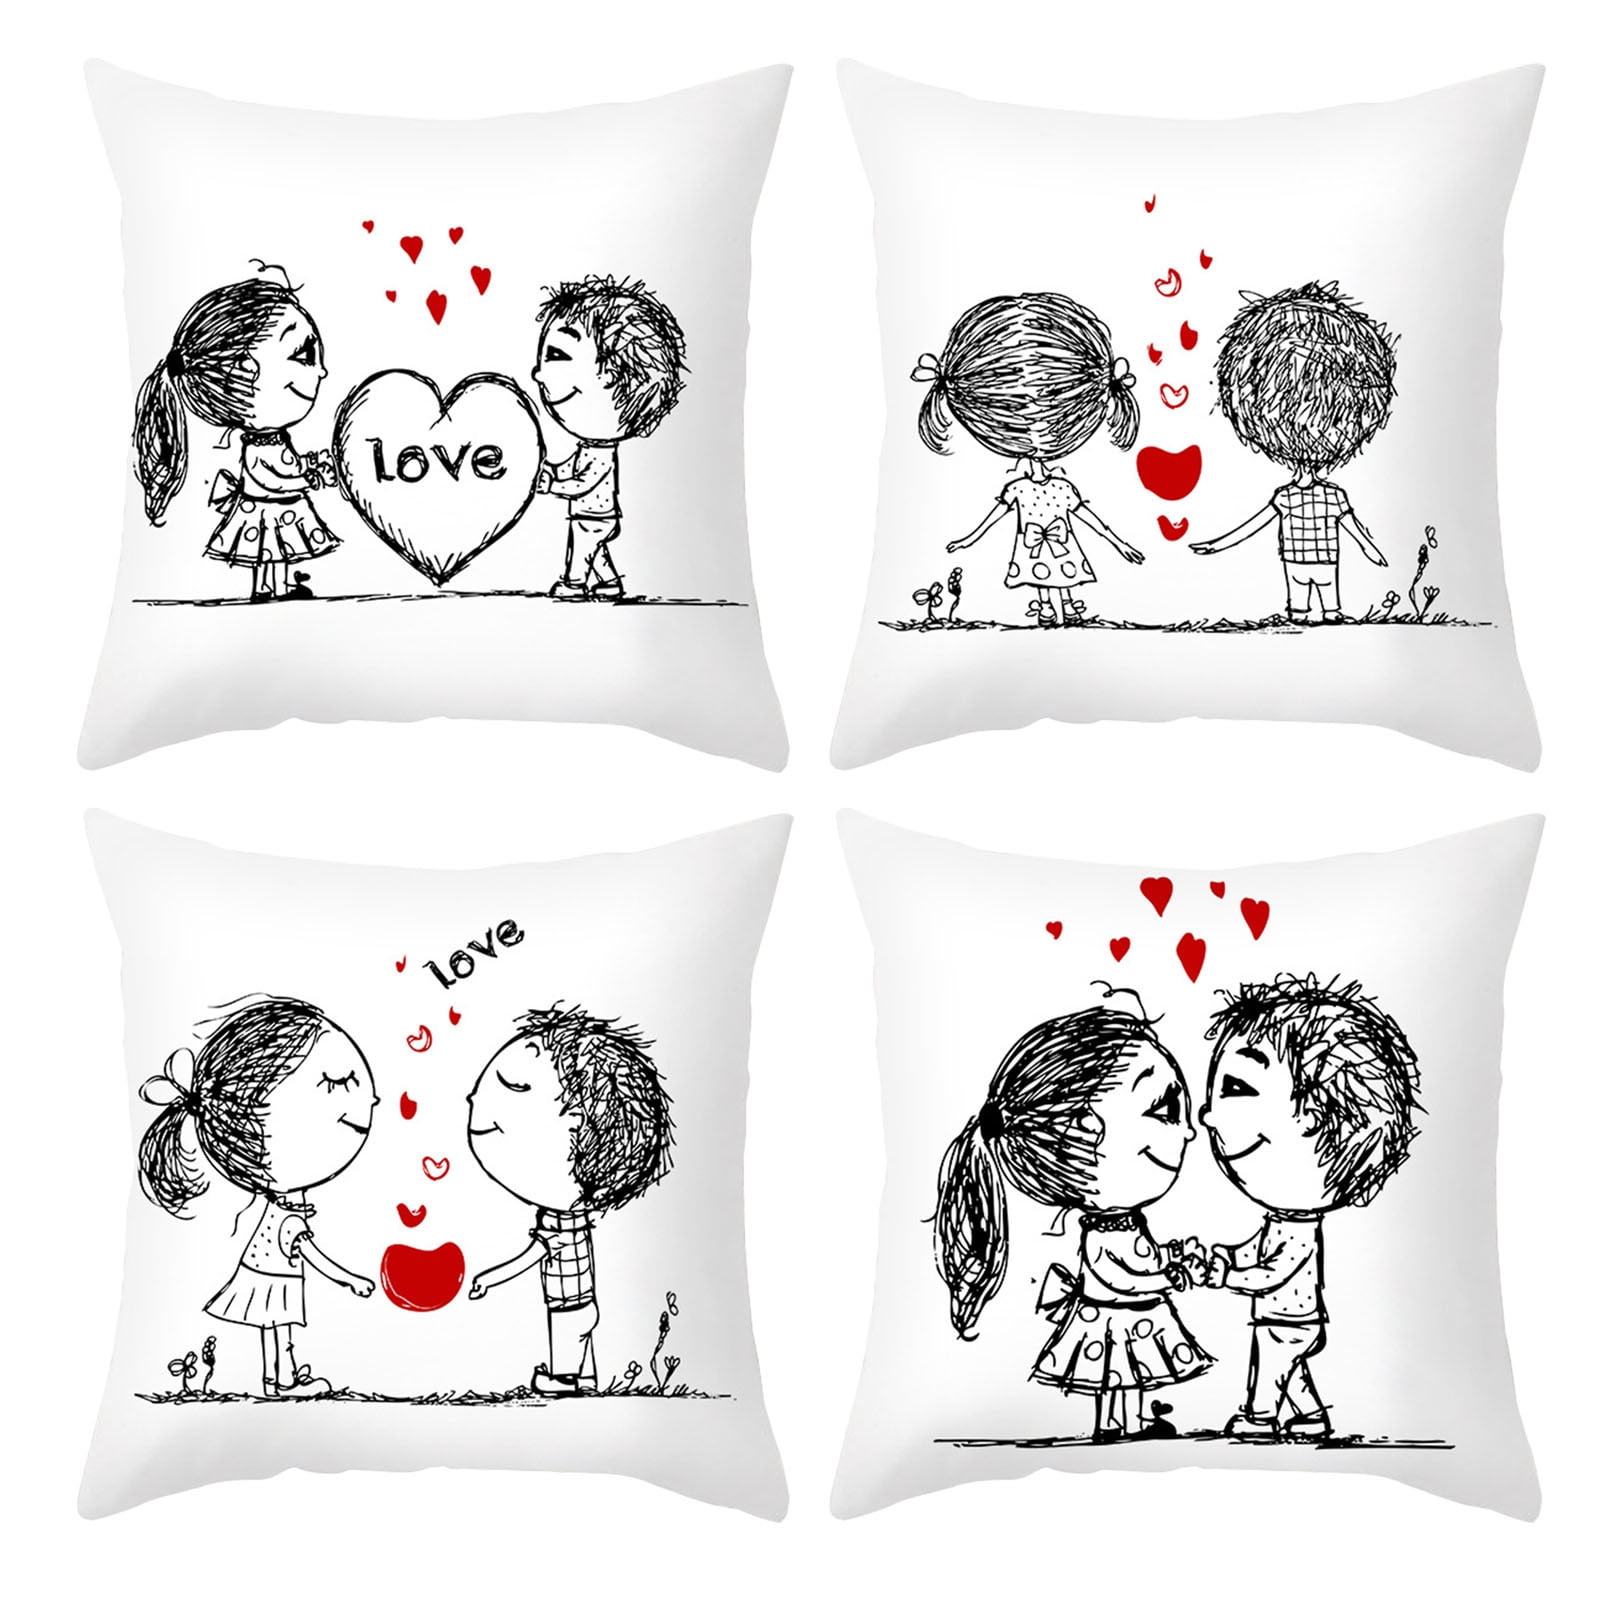 Pillows Customize Cushion Cover Gift Valentine Day Cute Pillowcase Print Photo 